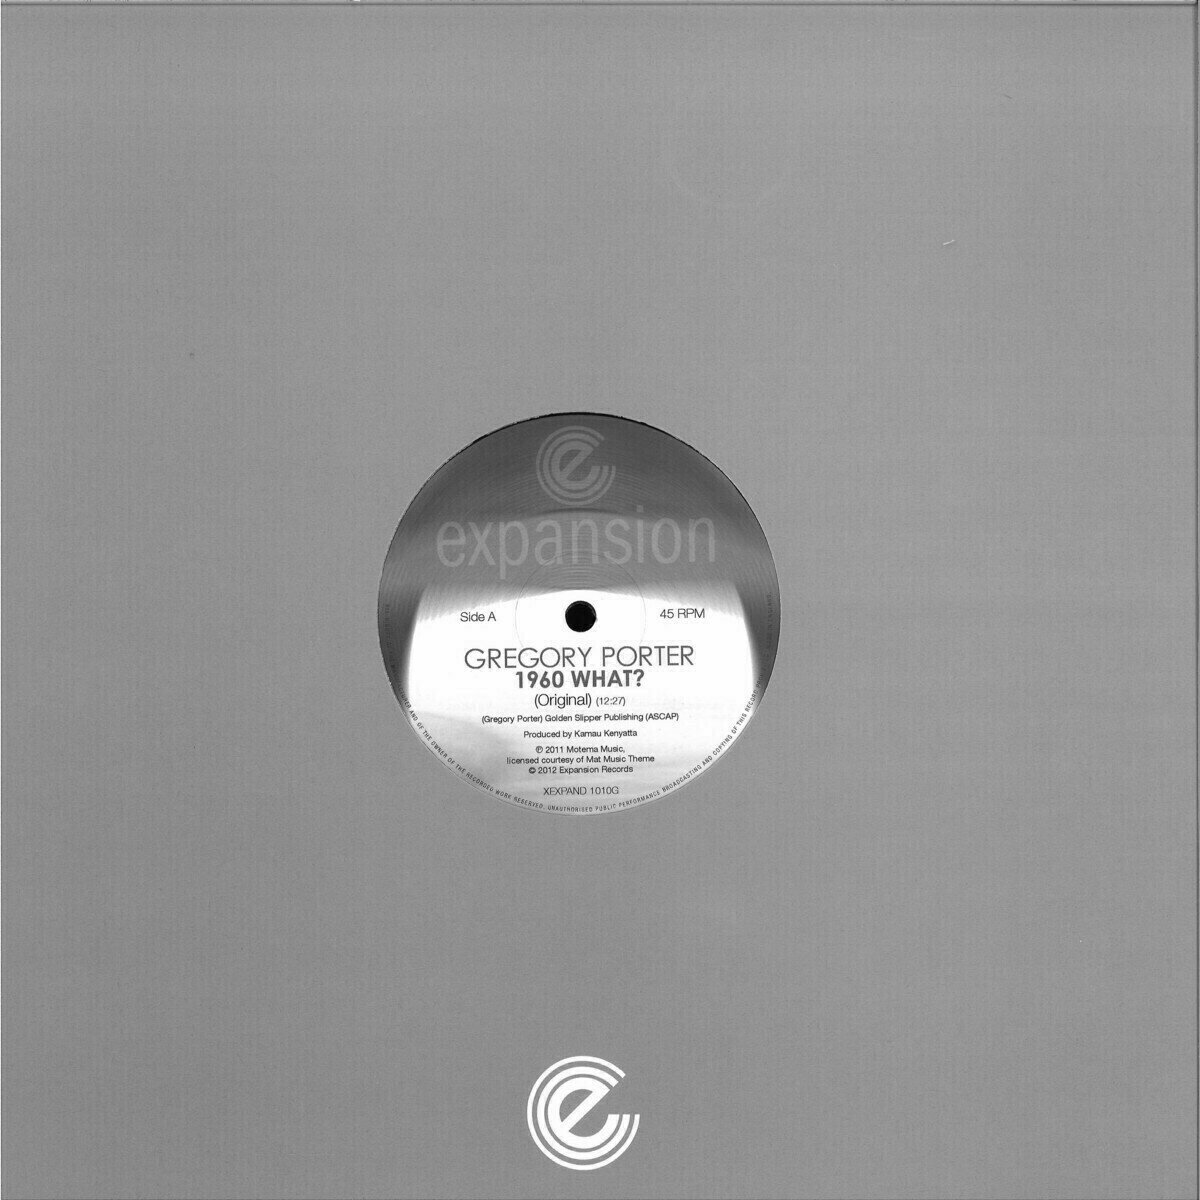 LP platňa Gregory Porter - 1960 What? (Original Mix) (12" Vinyl)